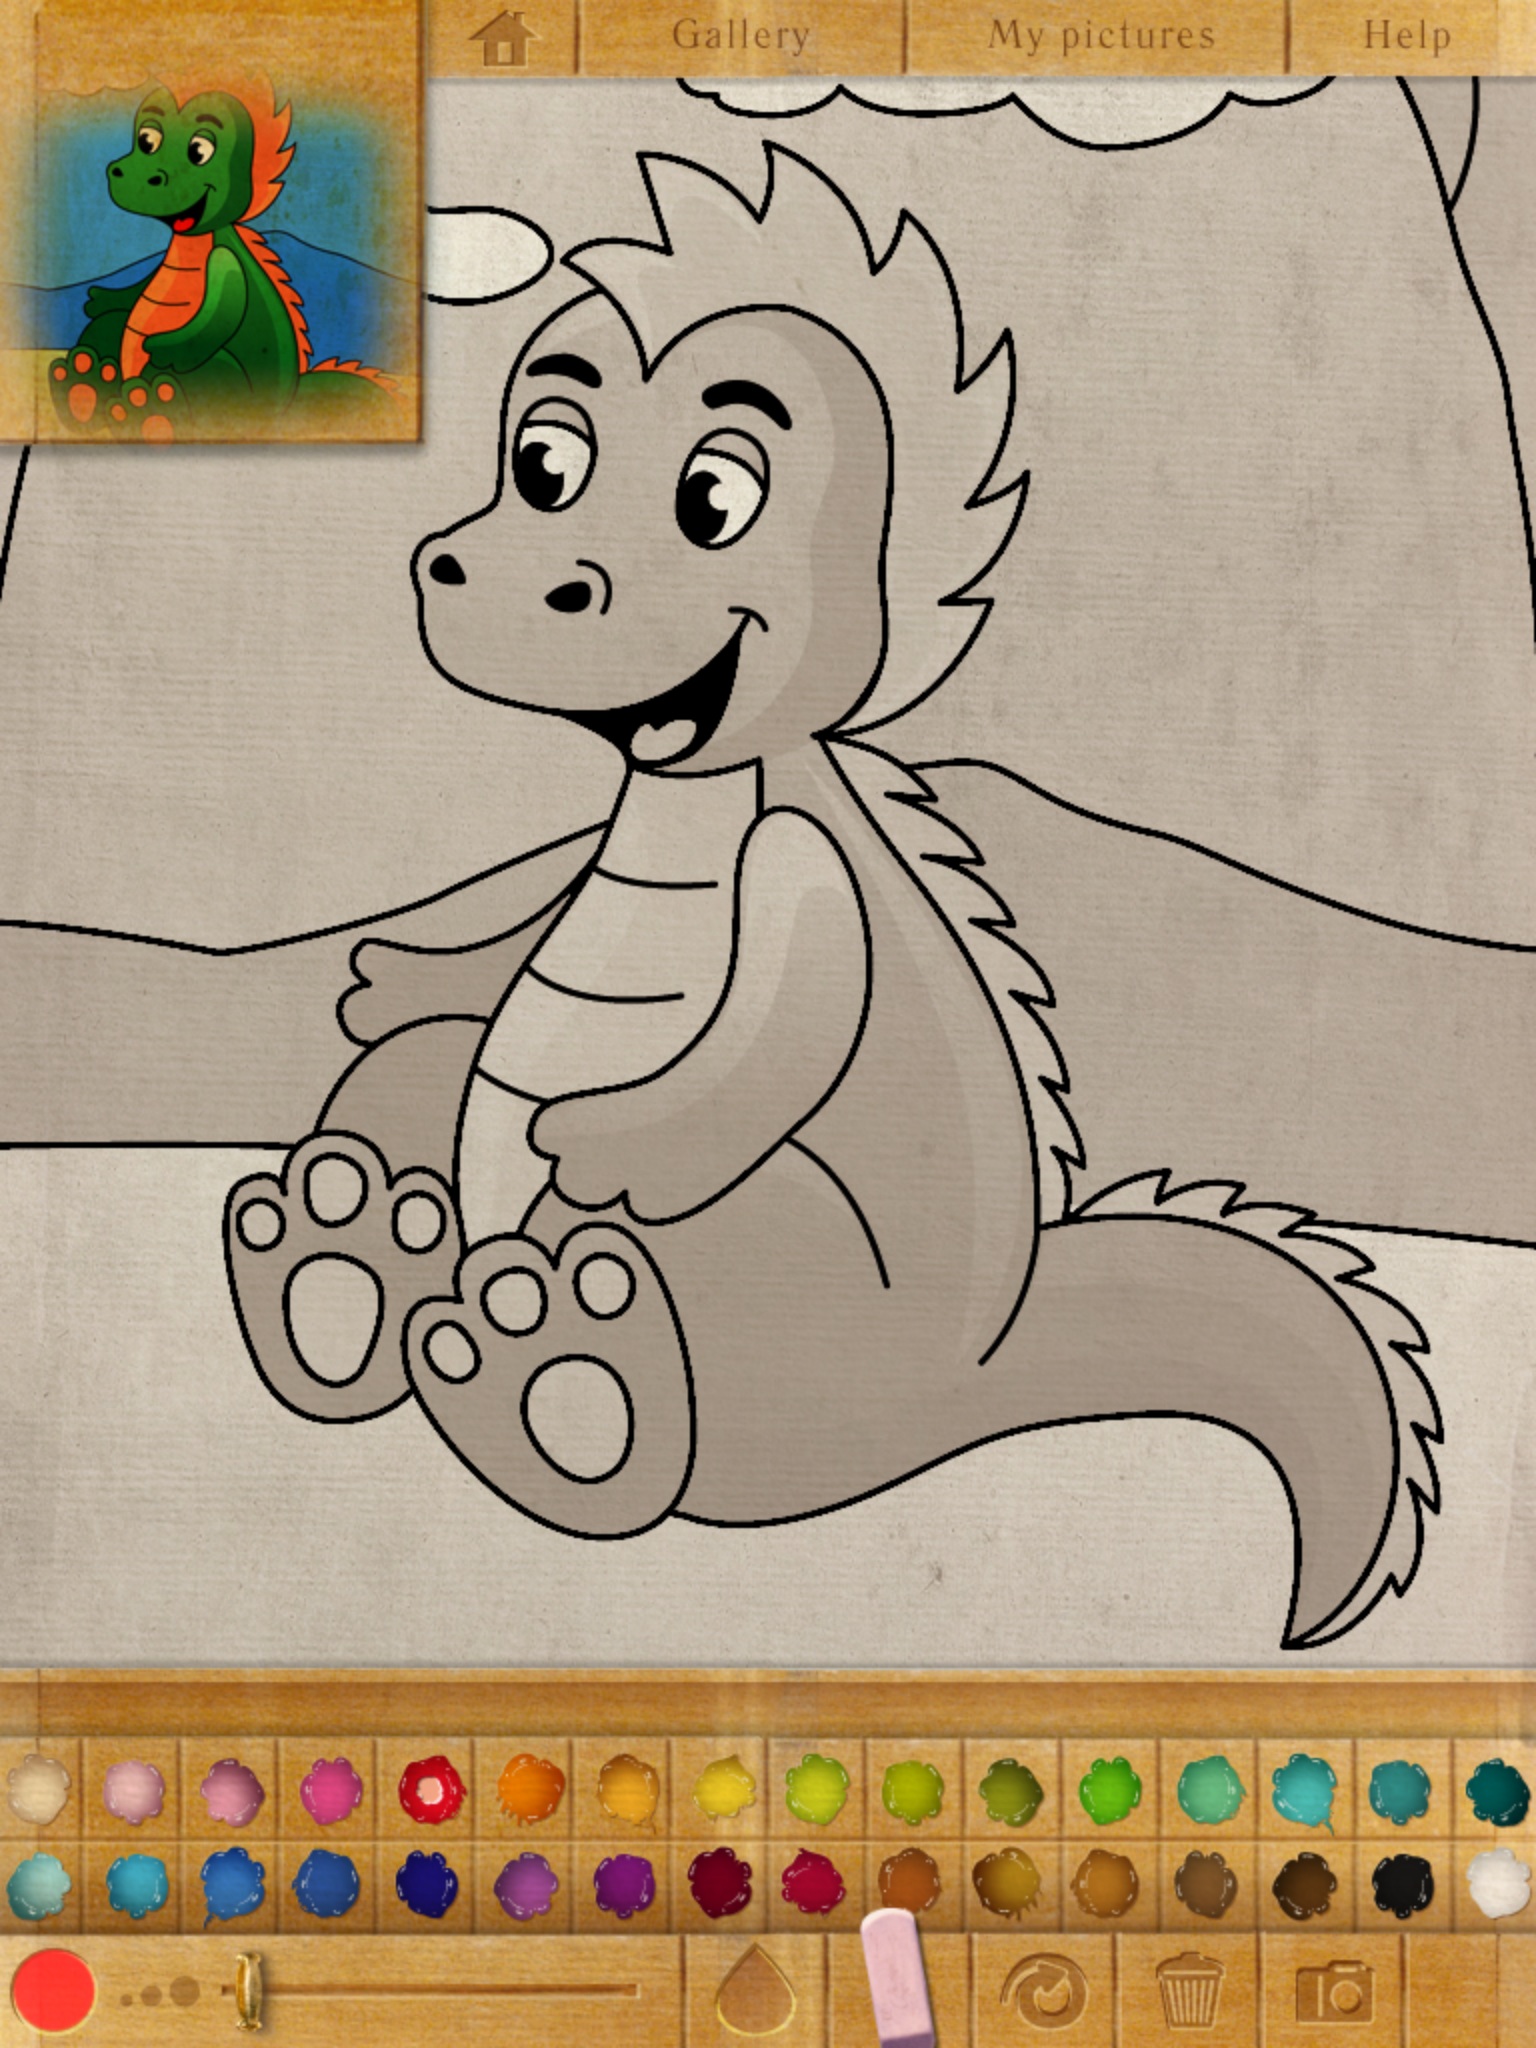 Dini-baby-tekentool-ipad-app-2